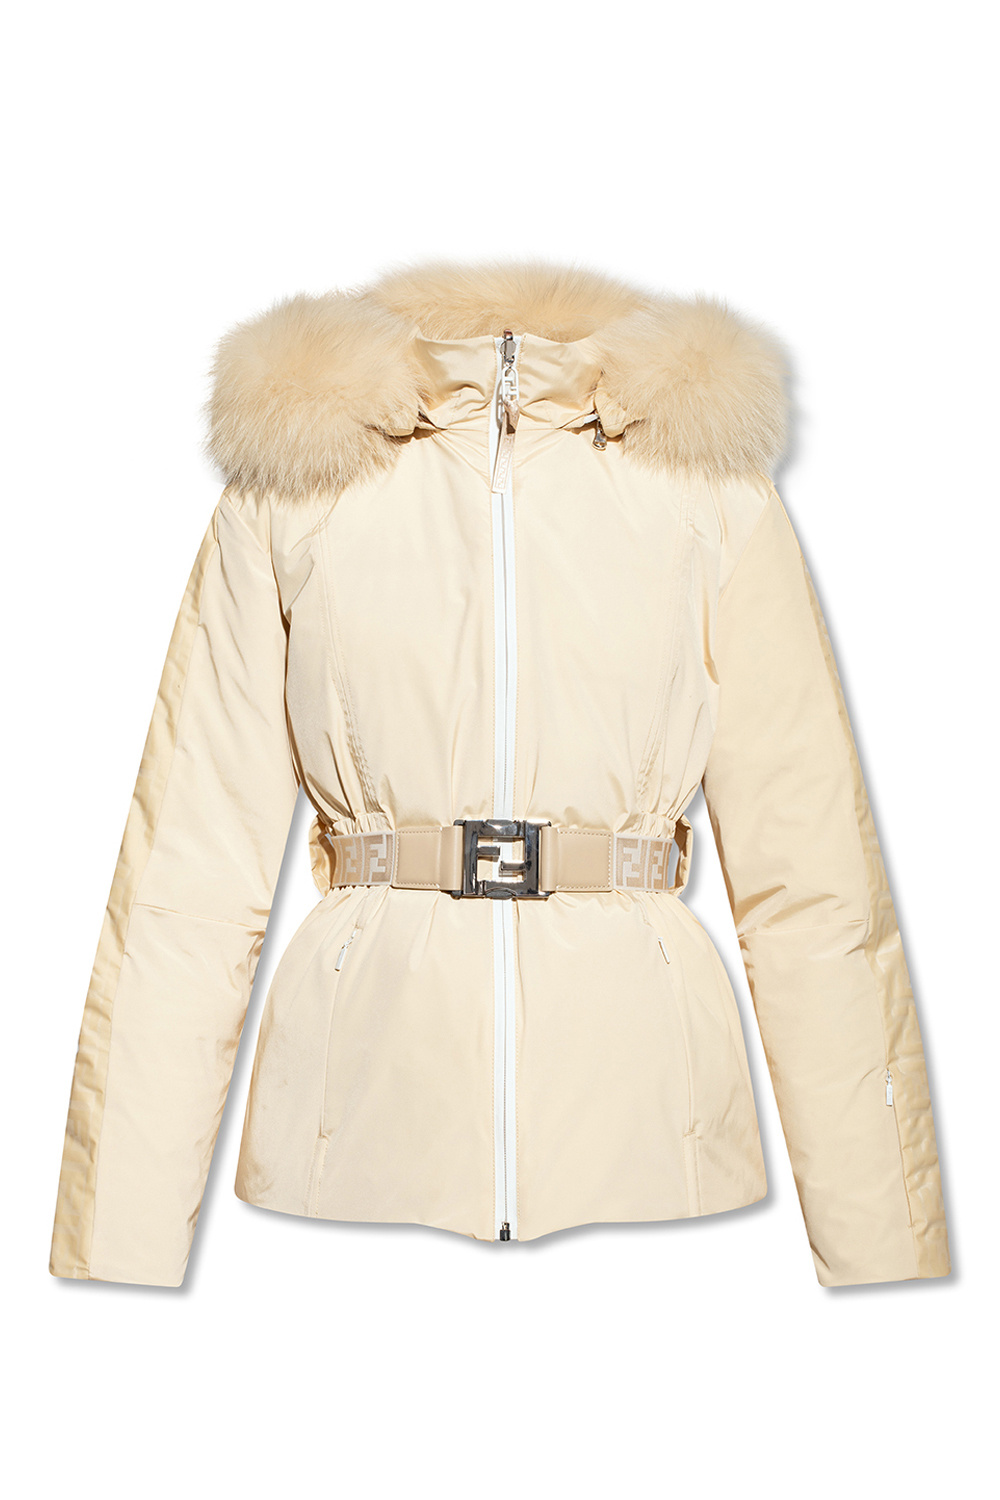 Fendi Fur Collar Ski Jacket  Fashion, Designer outfits woman, Jackets